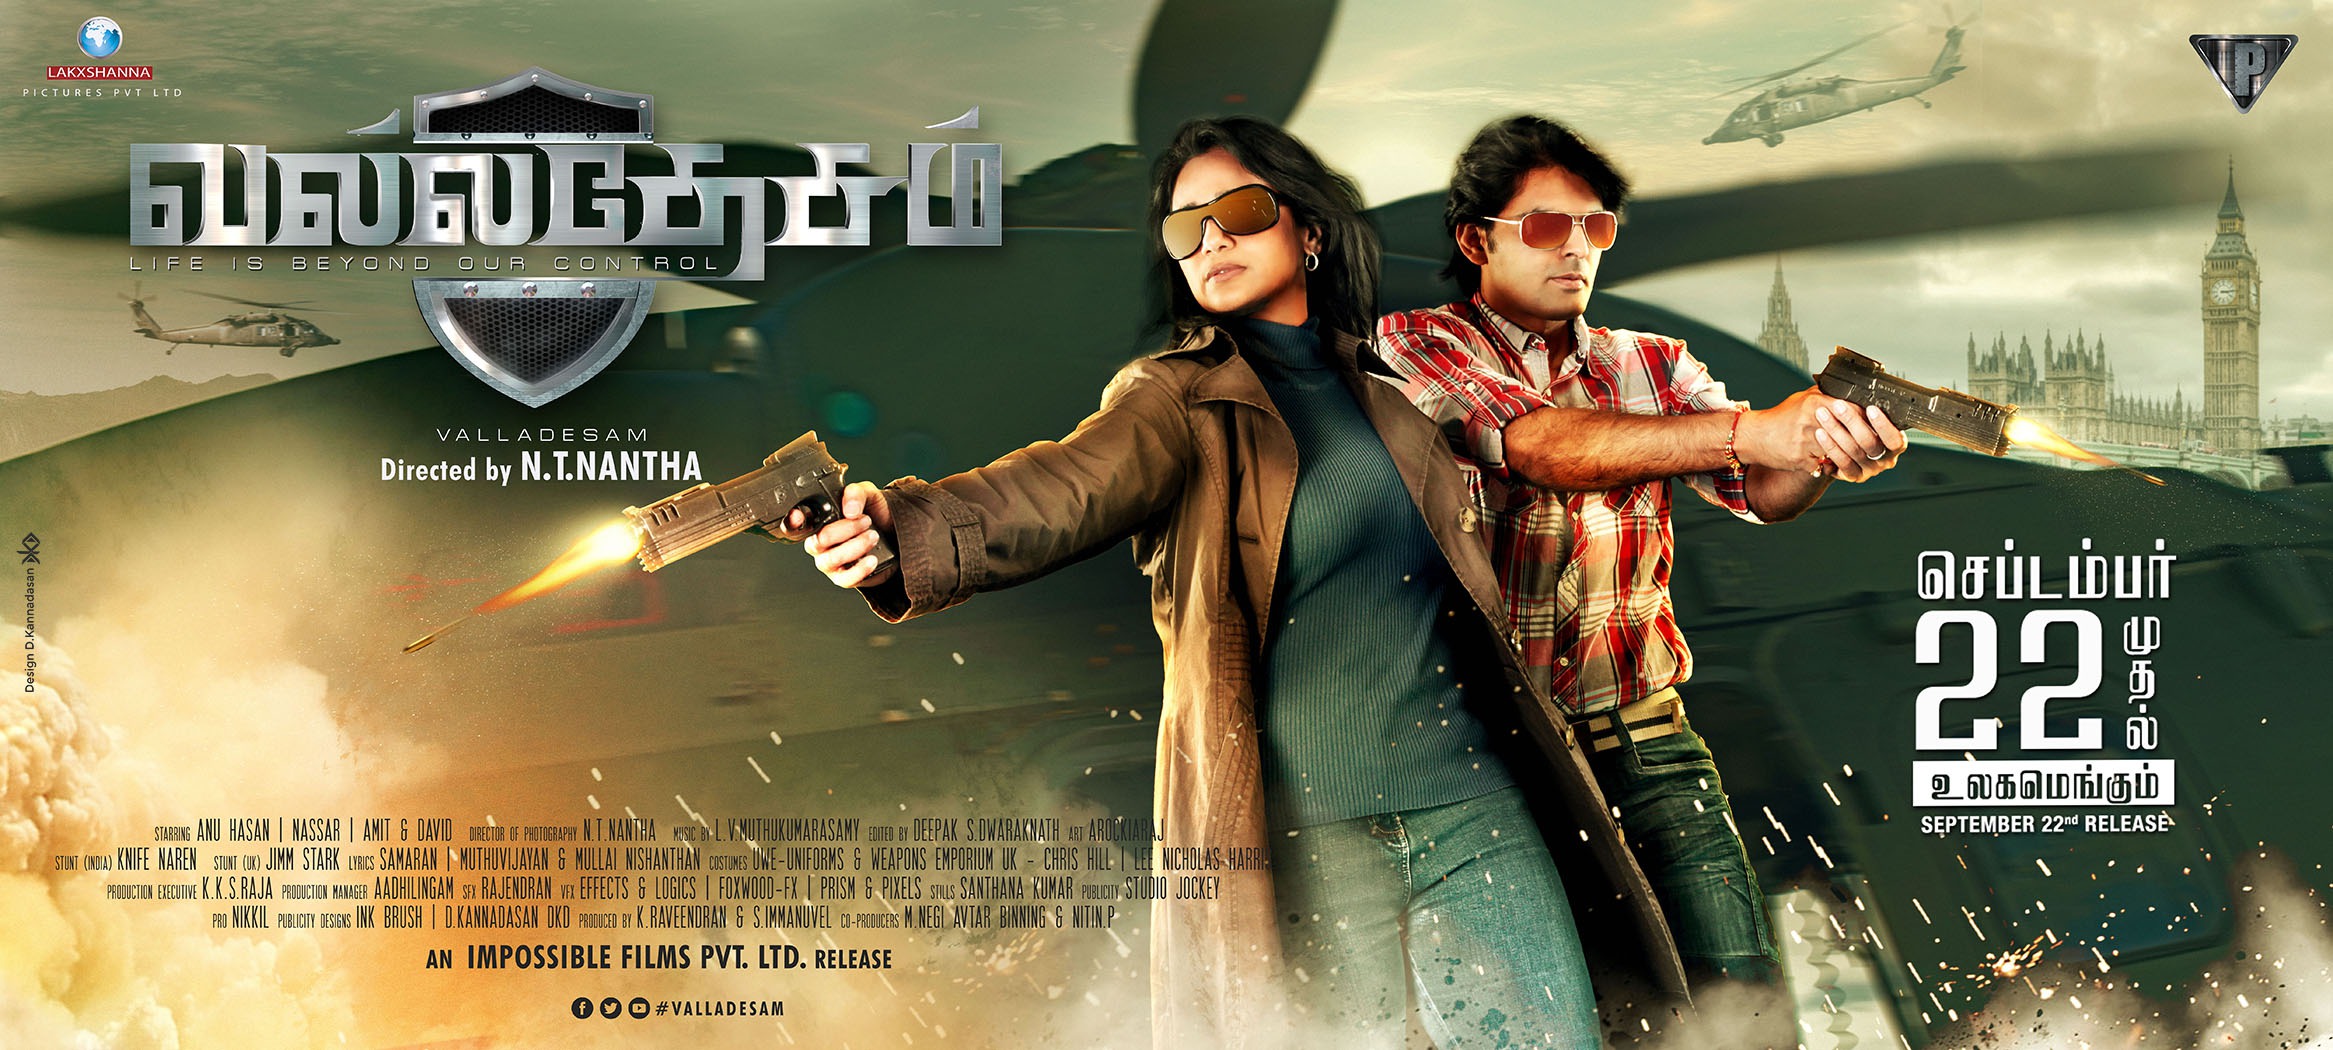 Mega Sized Movie Poster Image for Valladesam (#1 of 3)